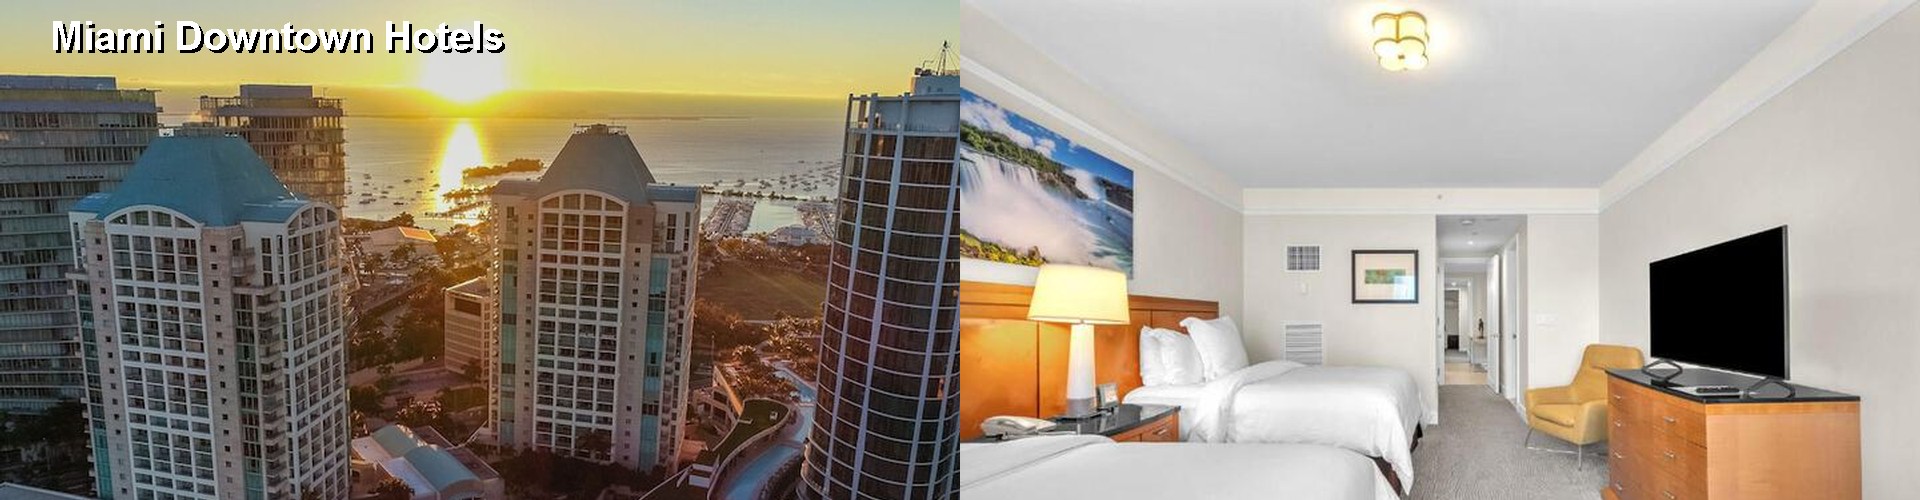 4 Best Hotels near Miami Downtown